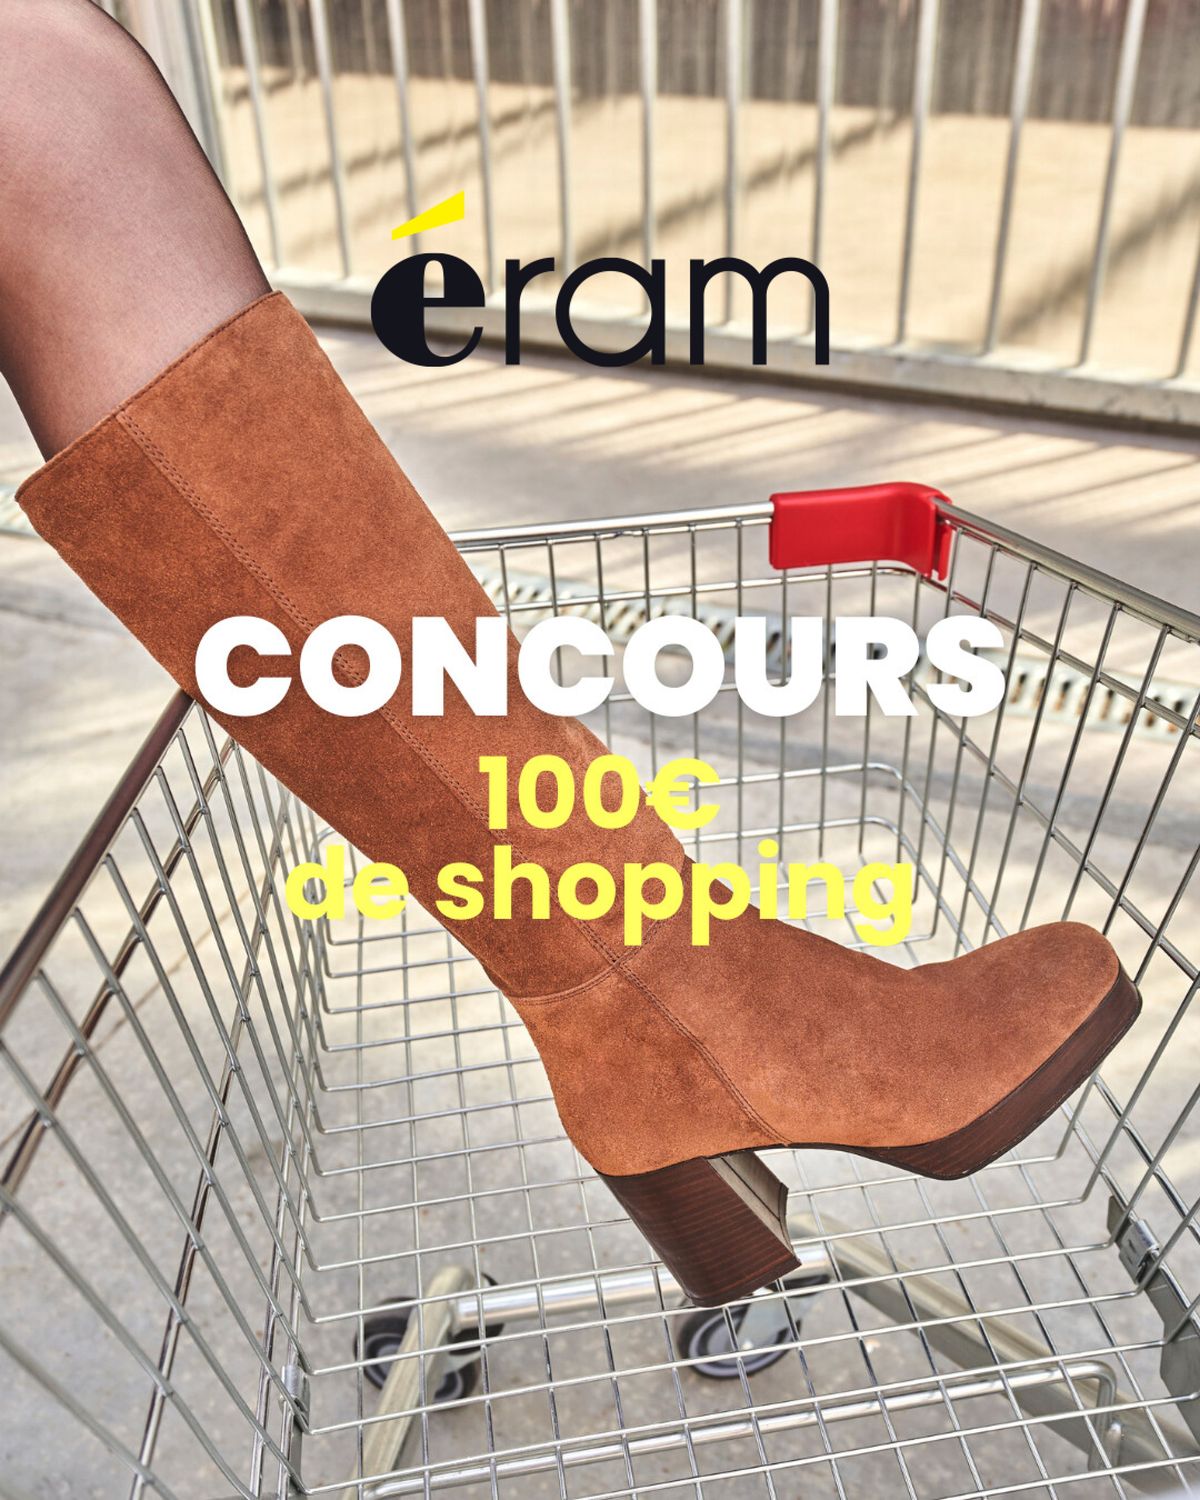 Catalogue Concours 100 € de shopping, page 00001